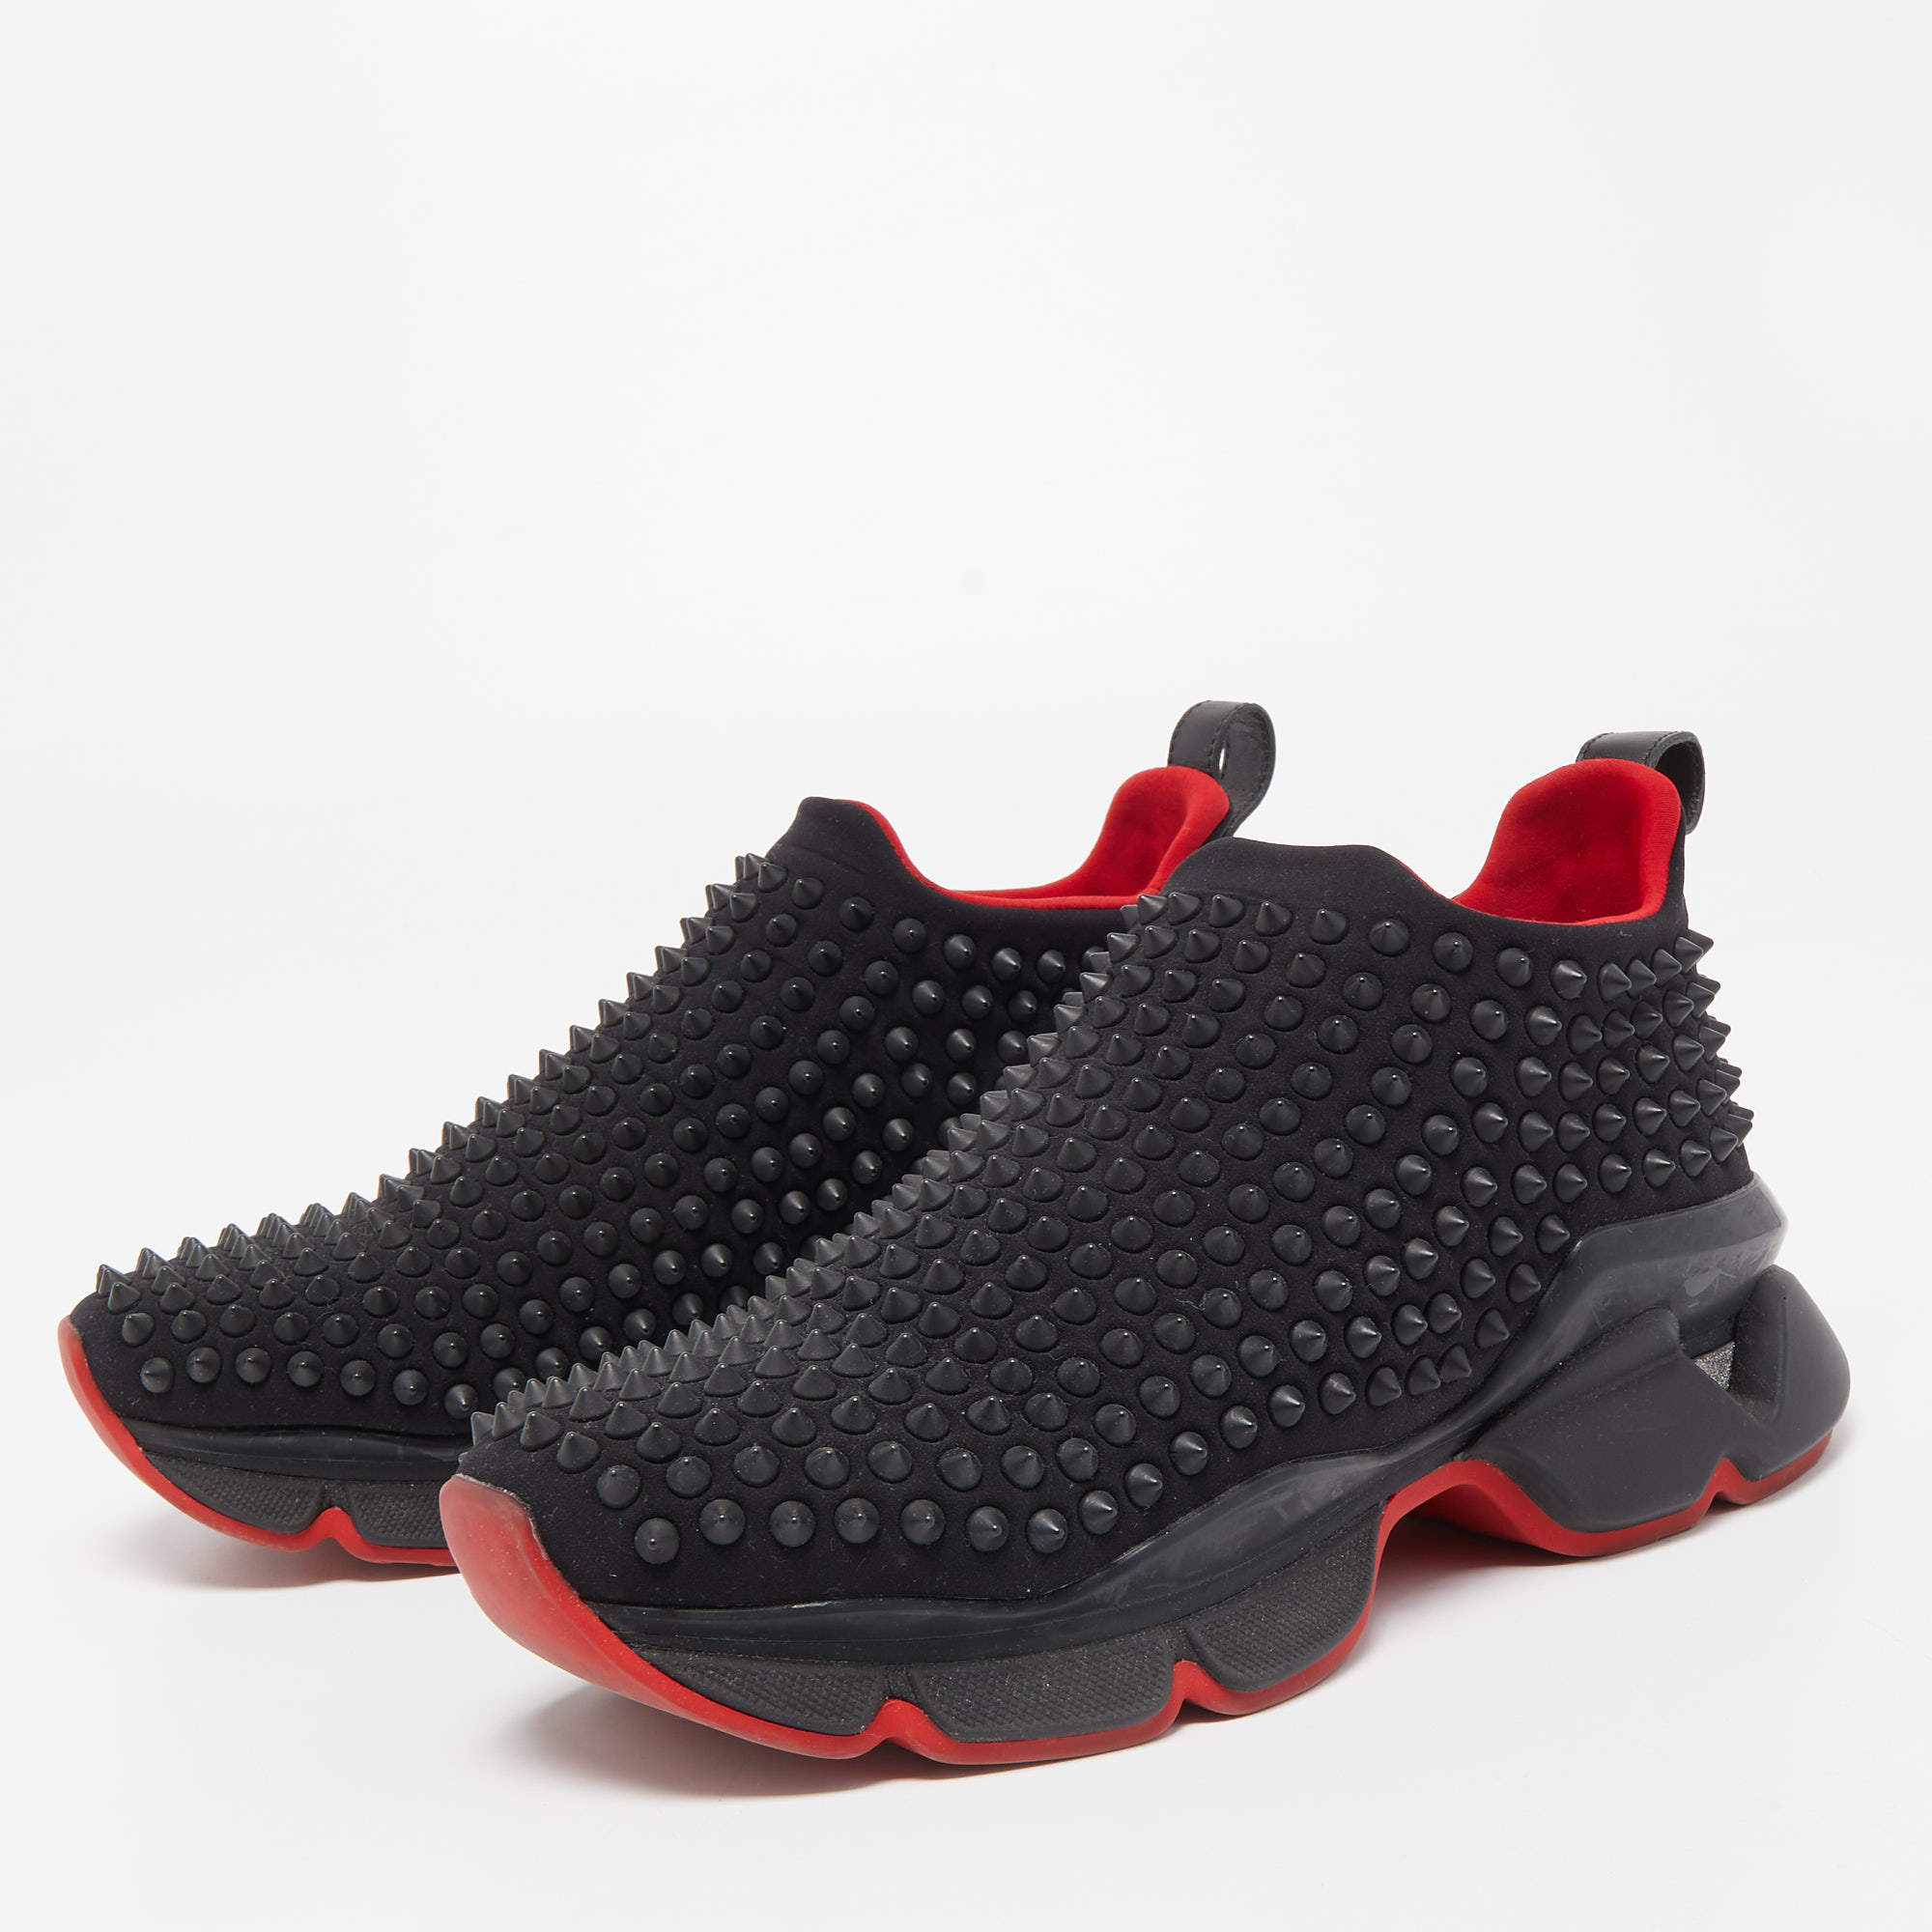 Christian Louboutin Spike Sock Sneakers Size 41/US 11 in Black